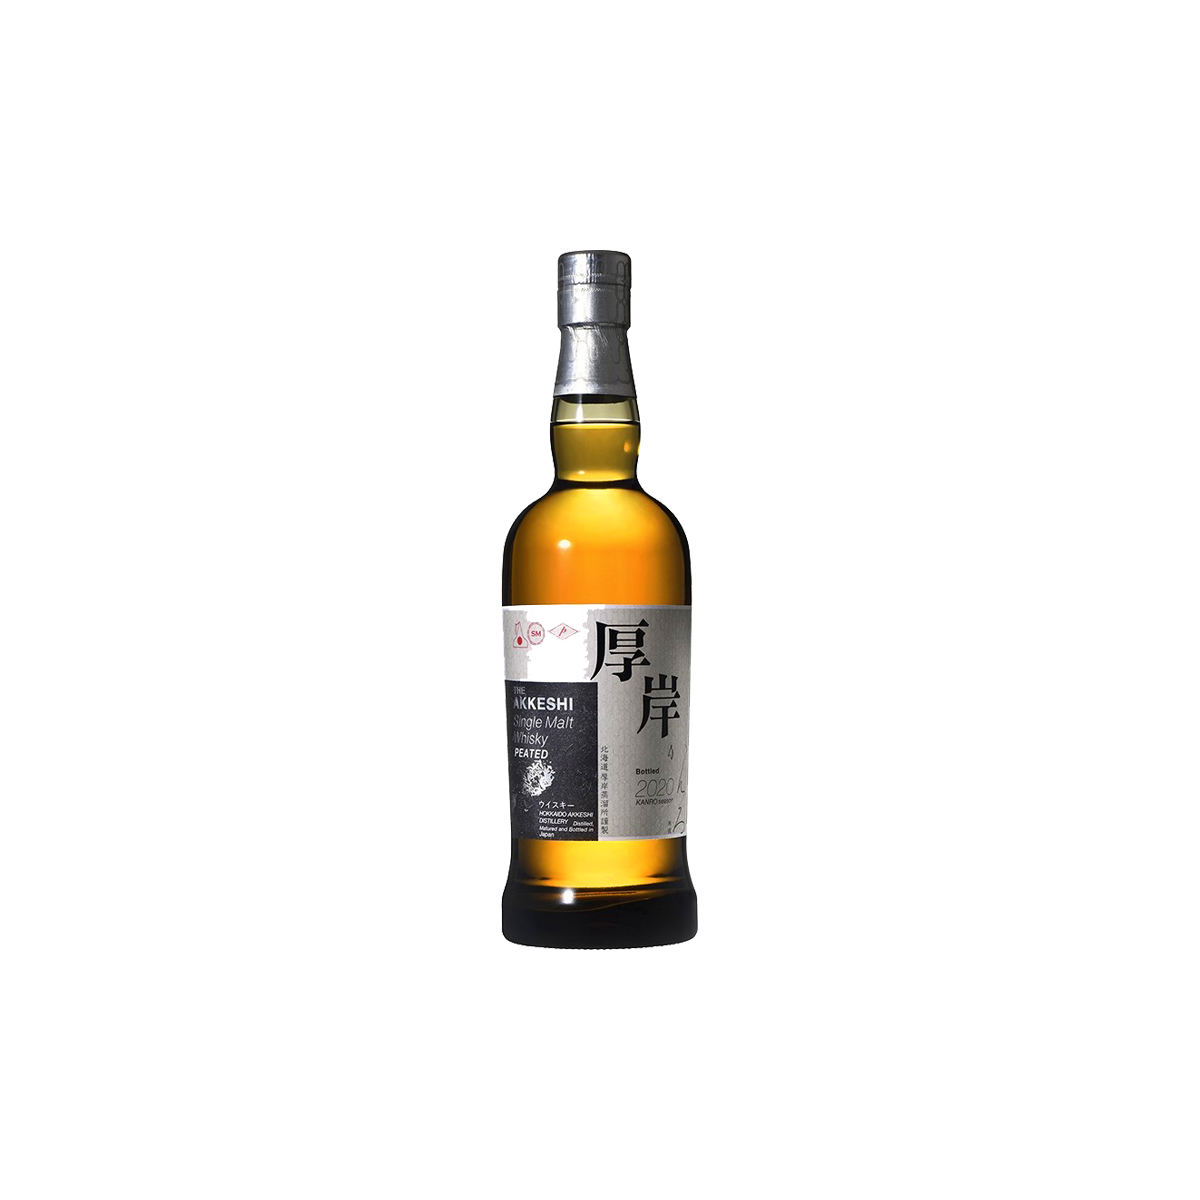 Akkeshi Single Malt Peated Kanro Whisky 55 %